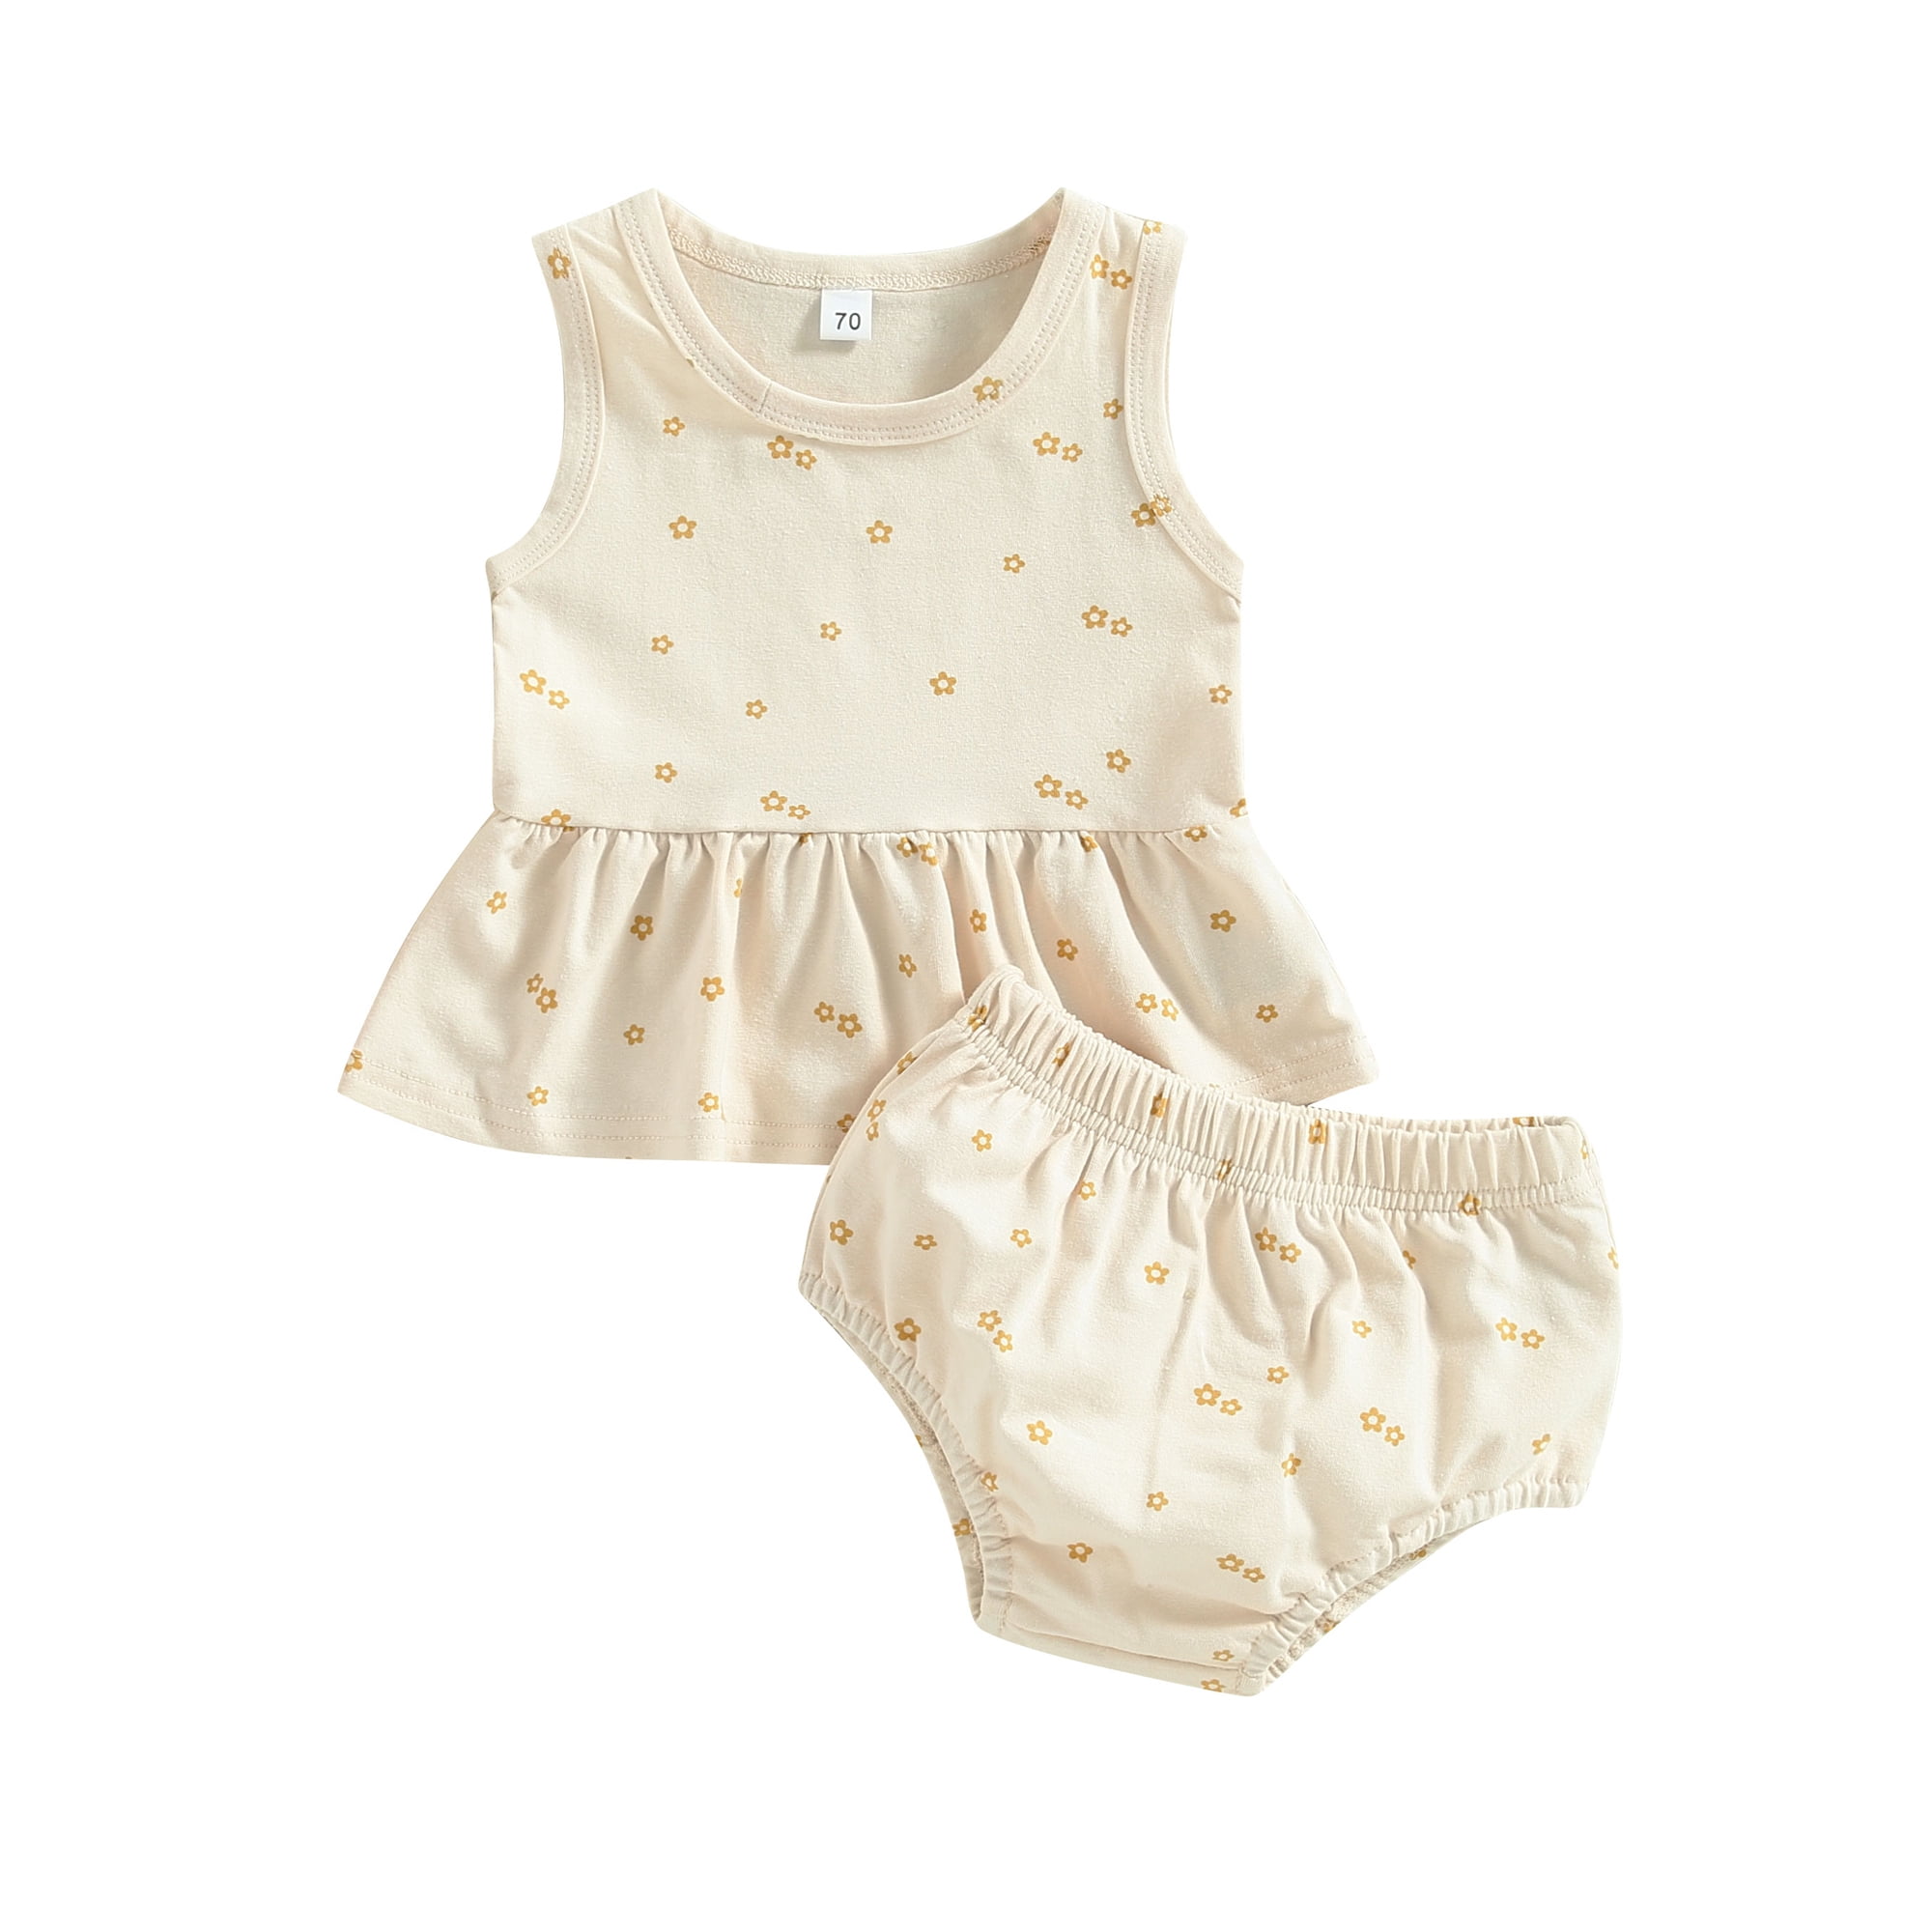 Bagilaanoe 2pcs Newborn Baby Girl Short Pants Set Checkerboard Print Sleeveless Romper Tops + Ruffle Shorts 3M 6M 12M 18M Infant Casual Summer Outfits